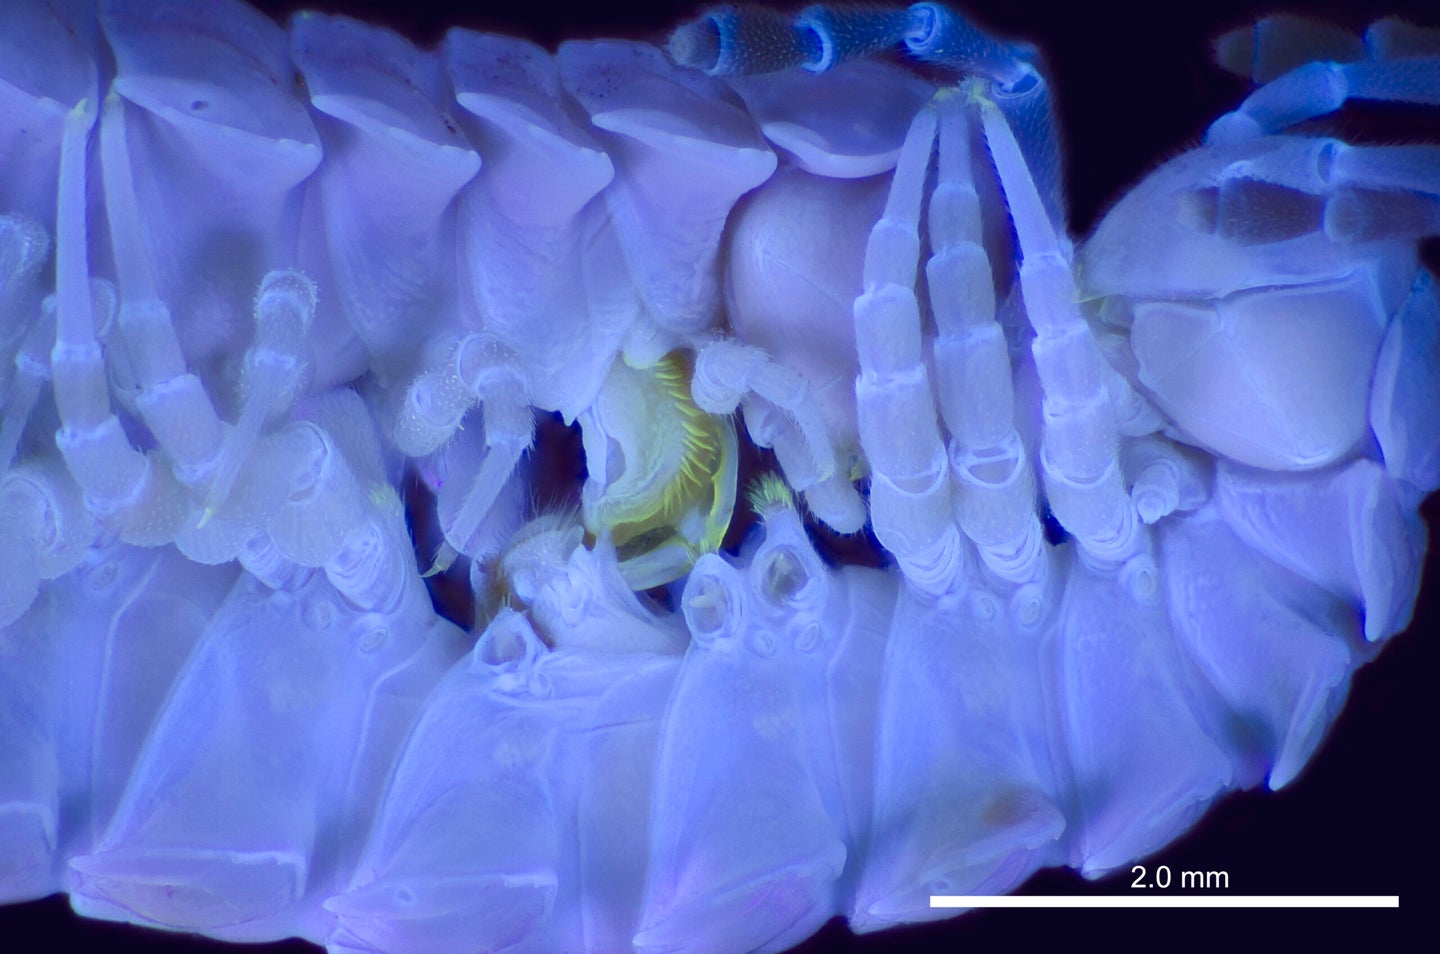 glowing millipedes having sex